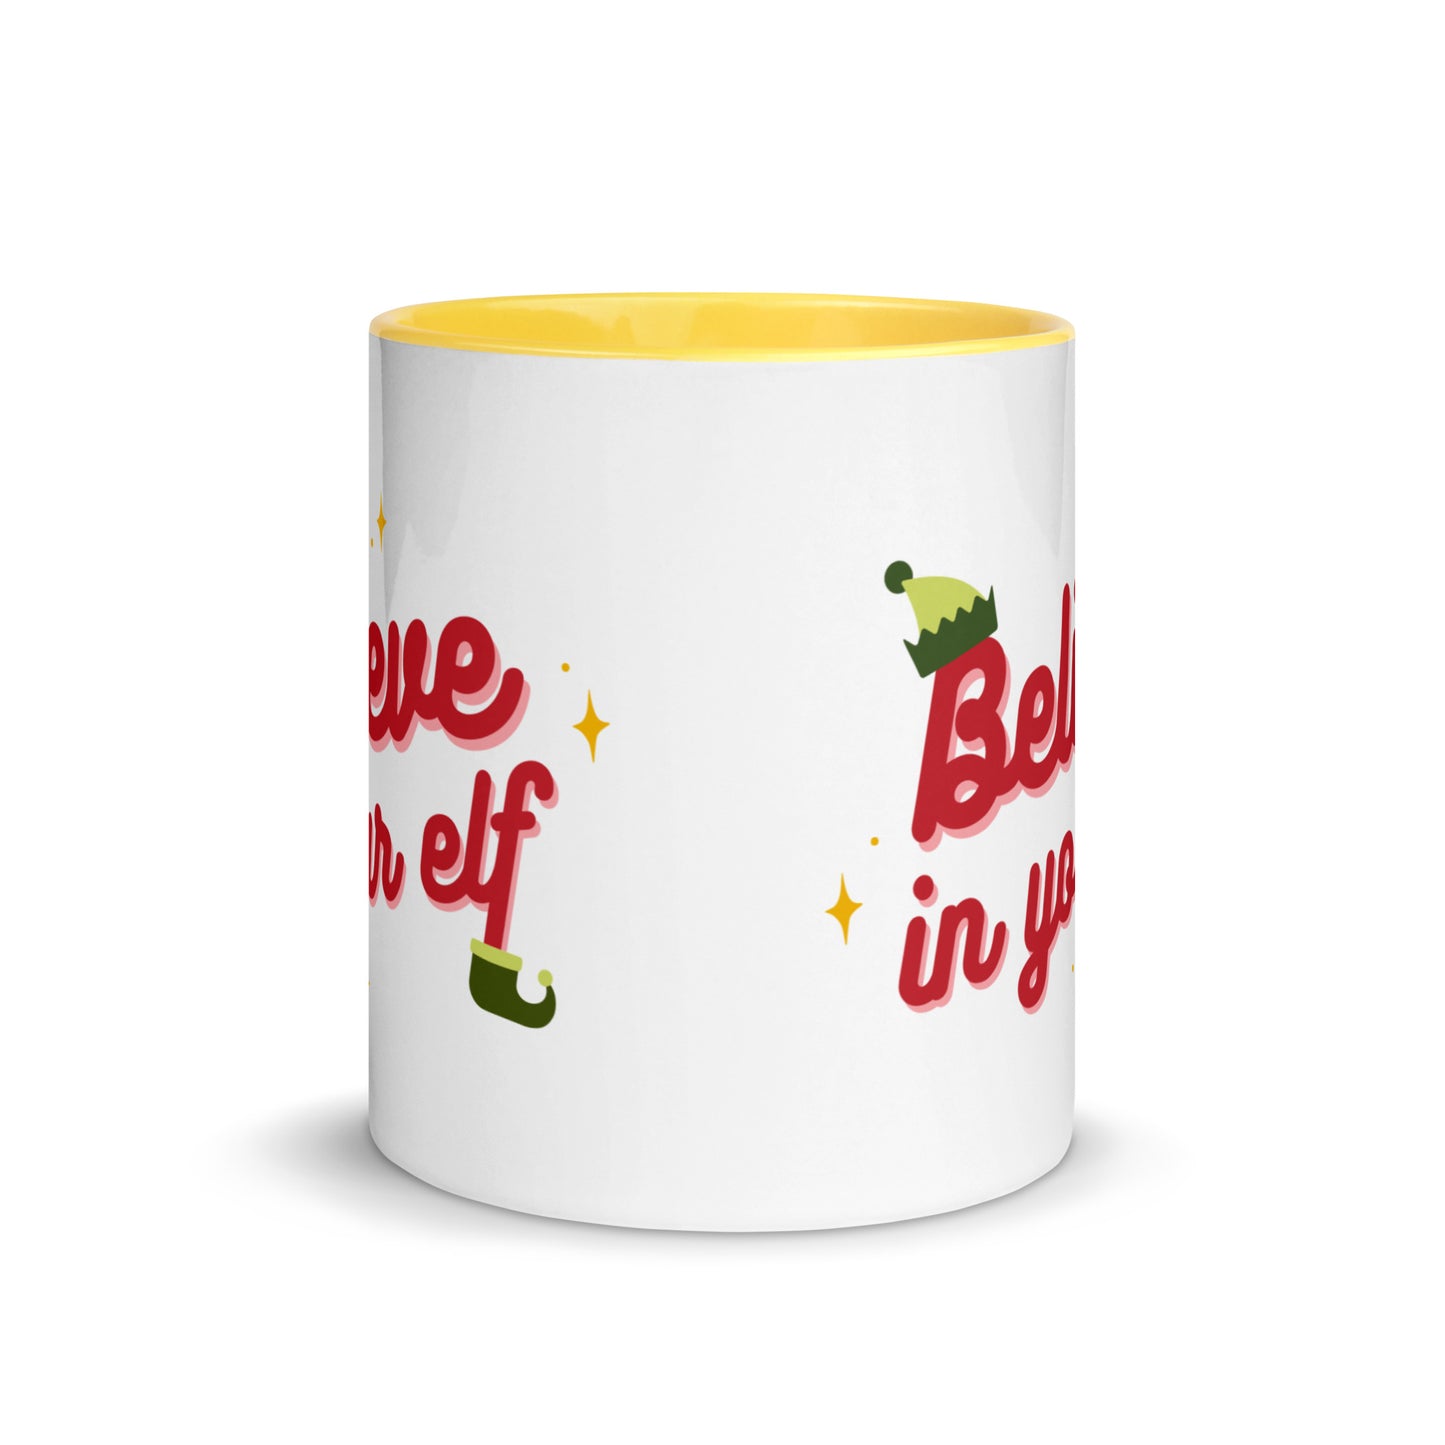 Believe in your Elf — 11oz Mug